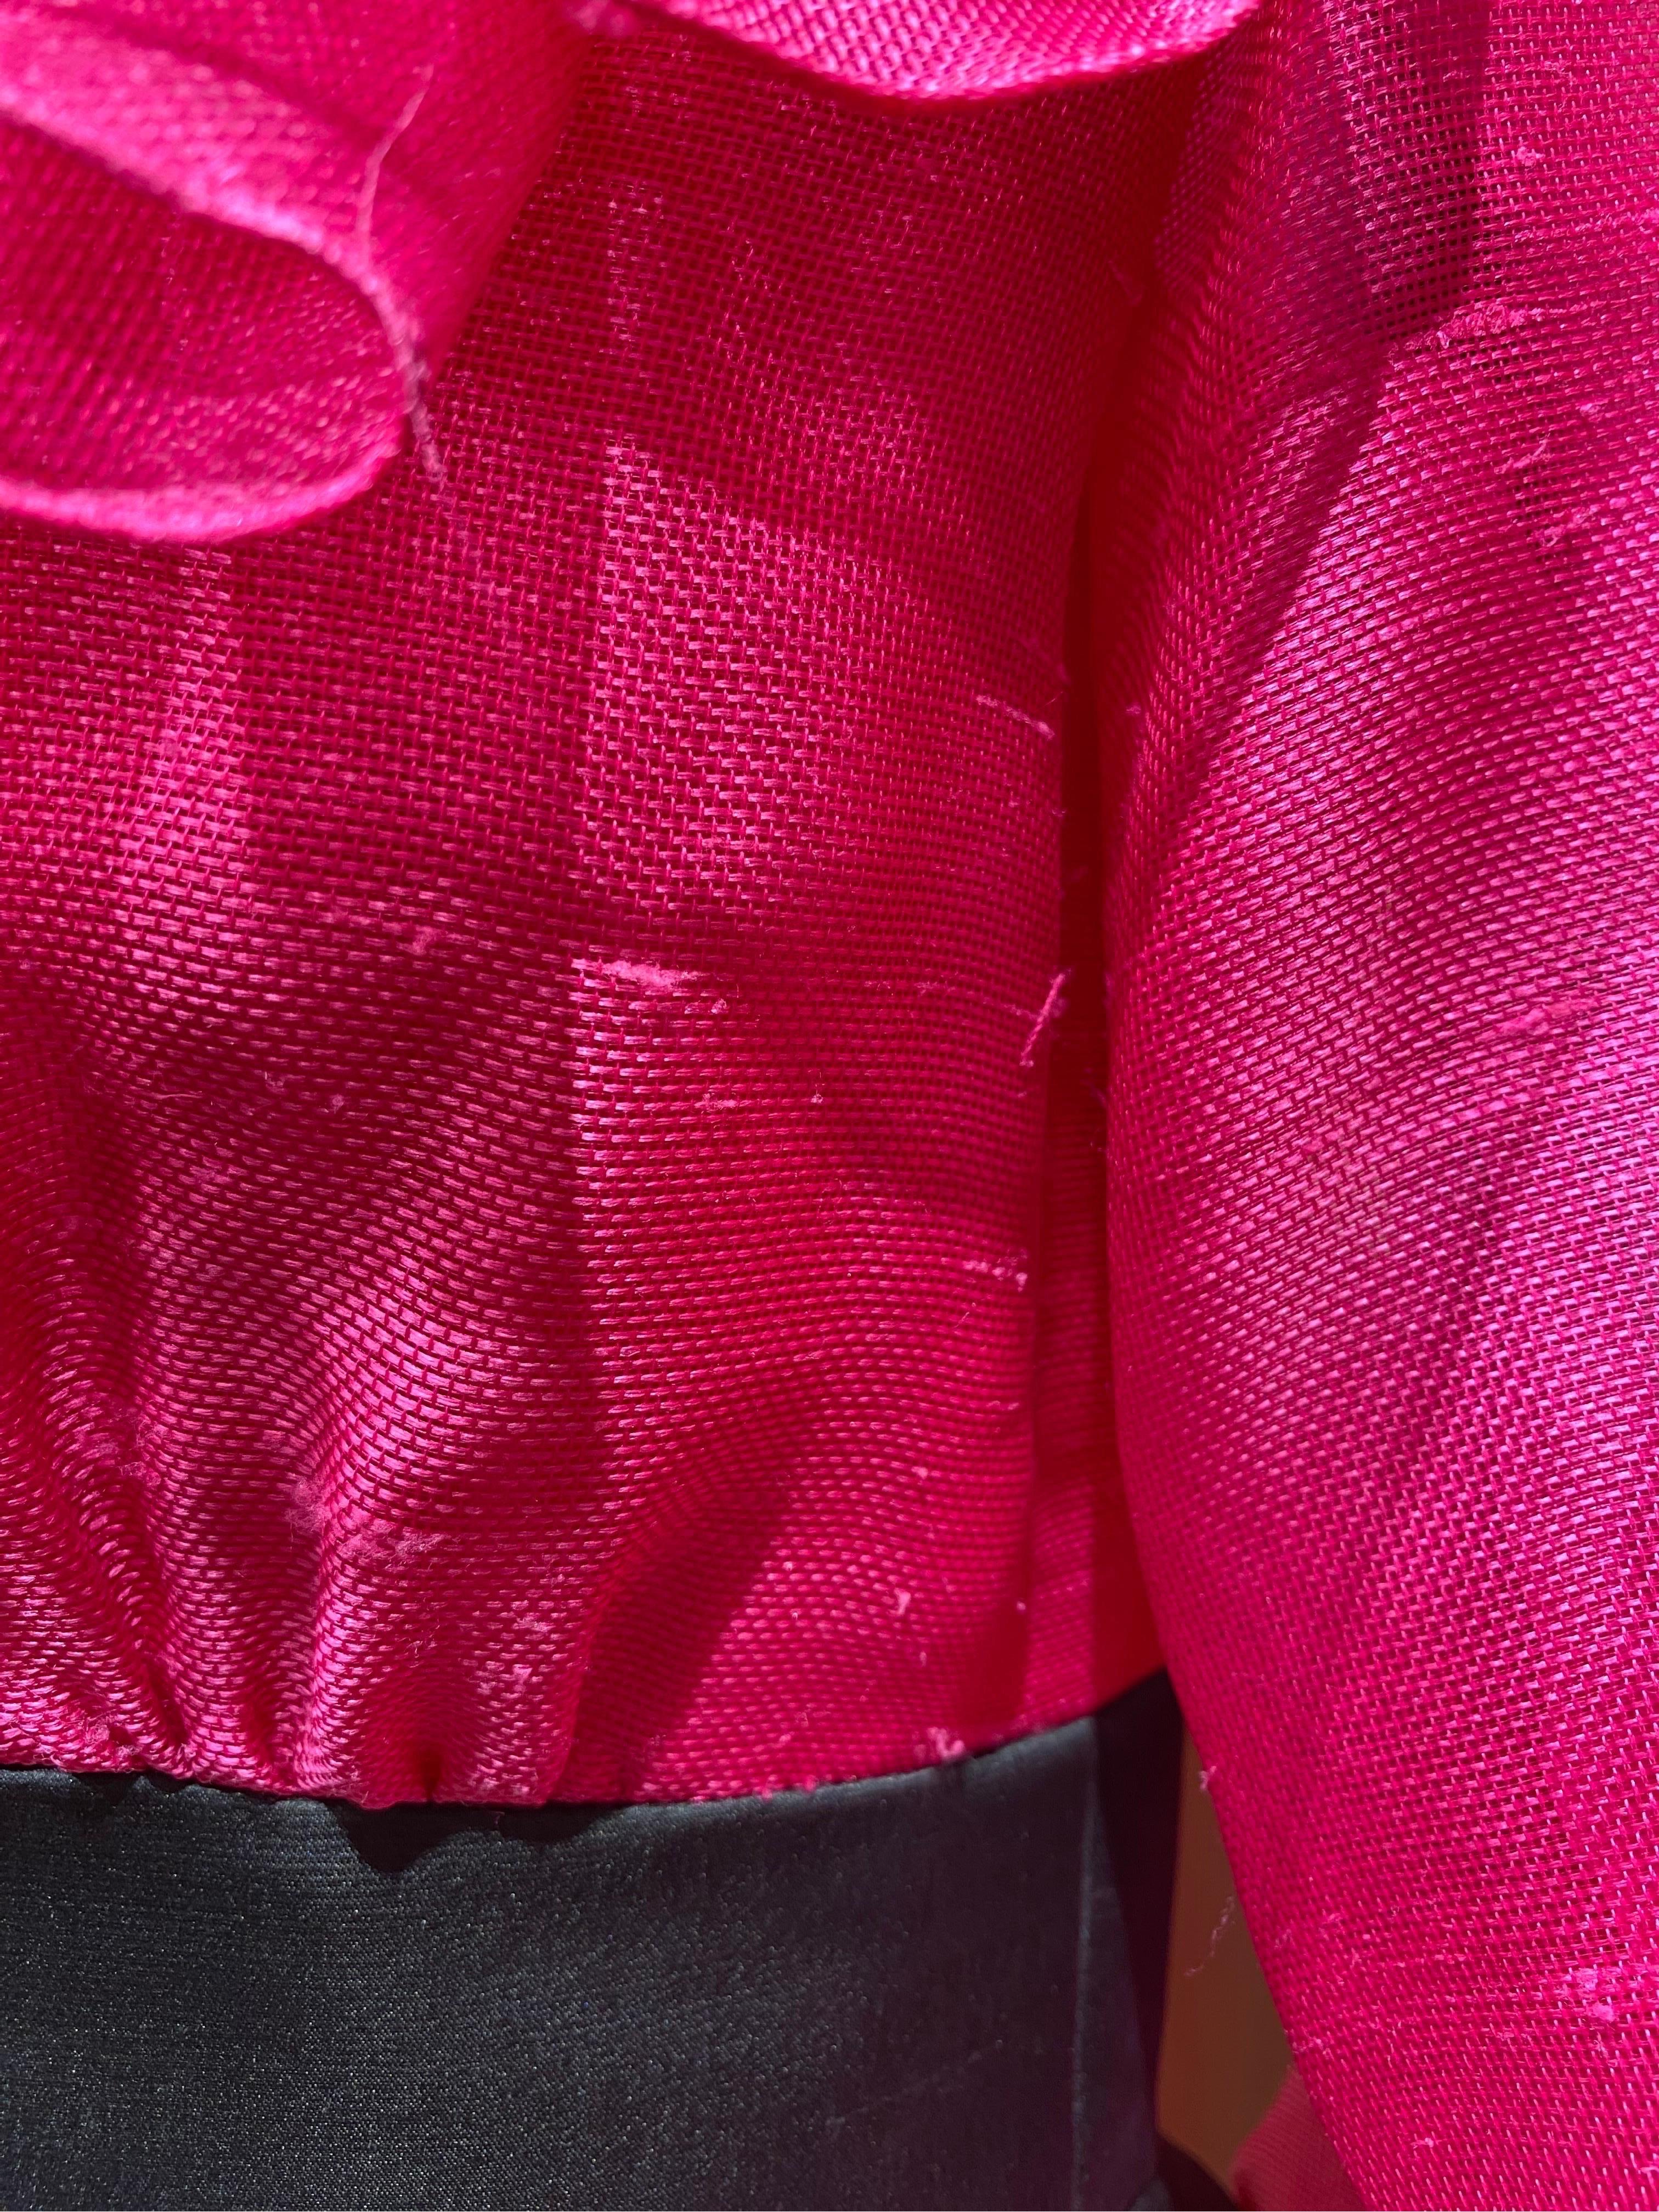 Oscar De La Renta Magenta Pink Silk Dress For Sale 2